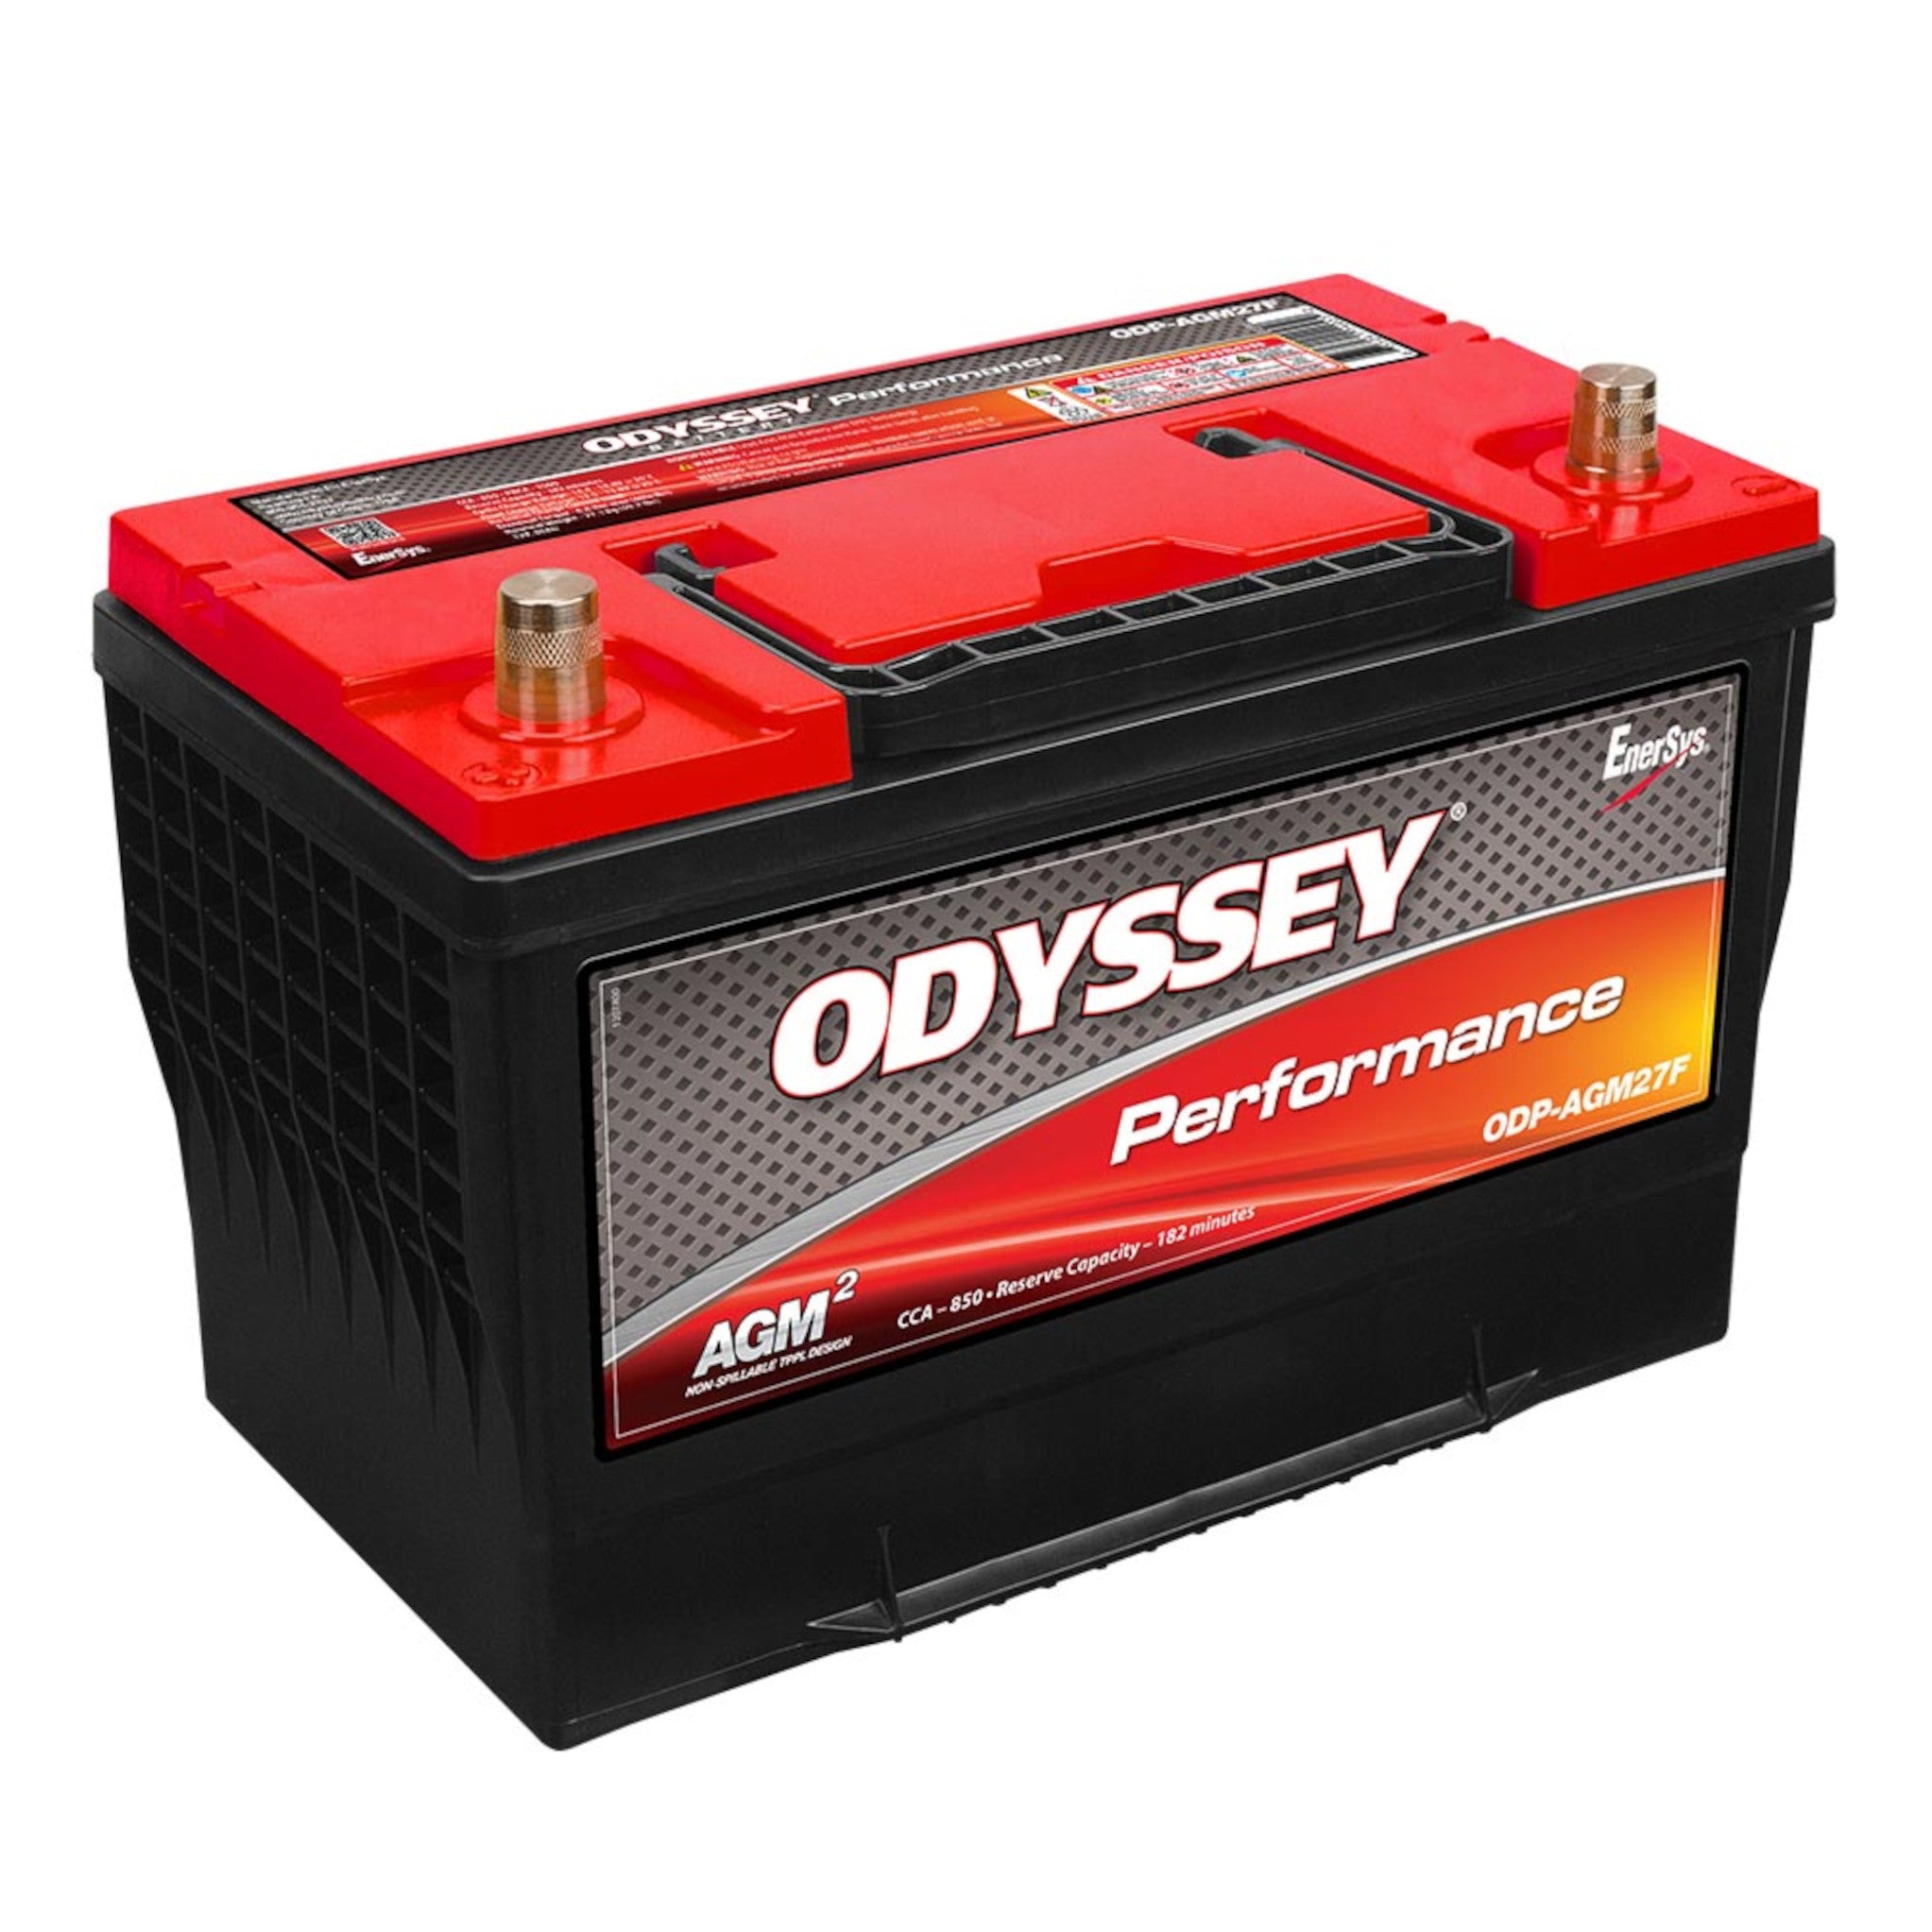 Odyssey ODP-AGM24F 12V Group 24F AGM Truck Battery